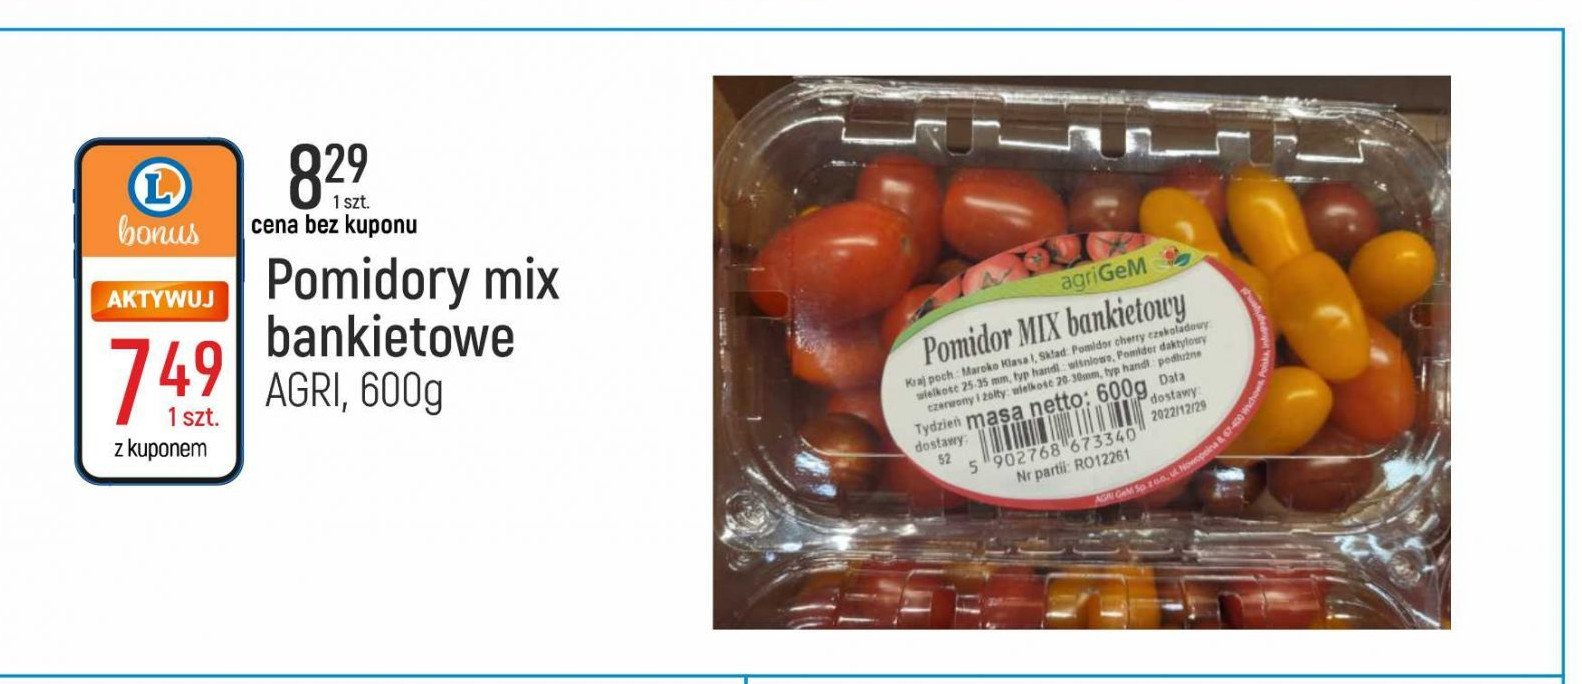 Pomidory mix bankietowe promocja